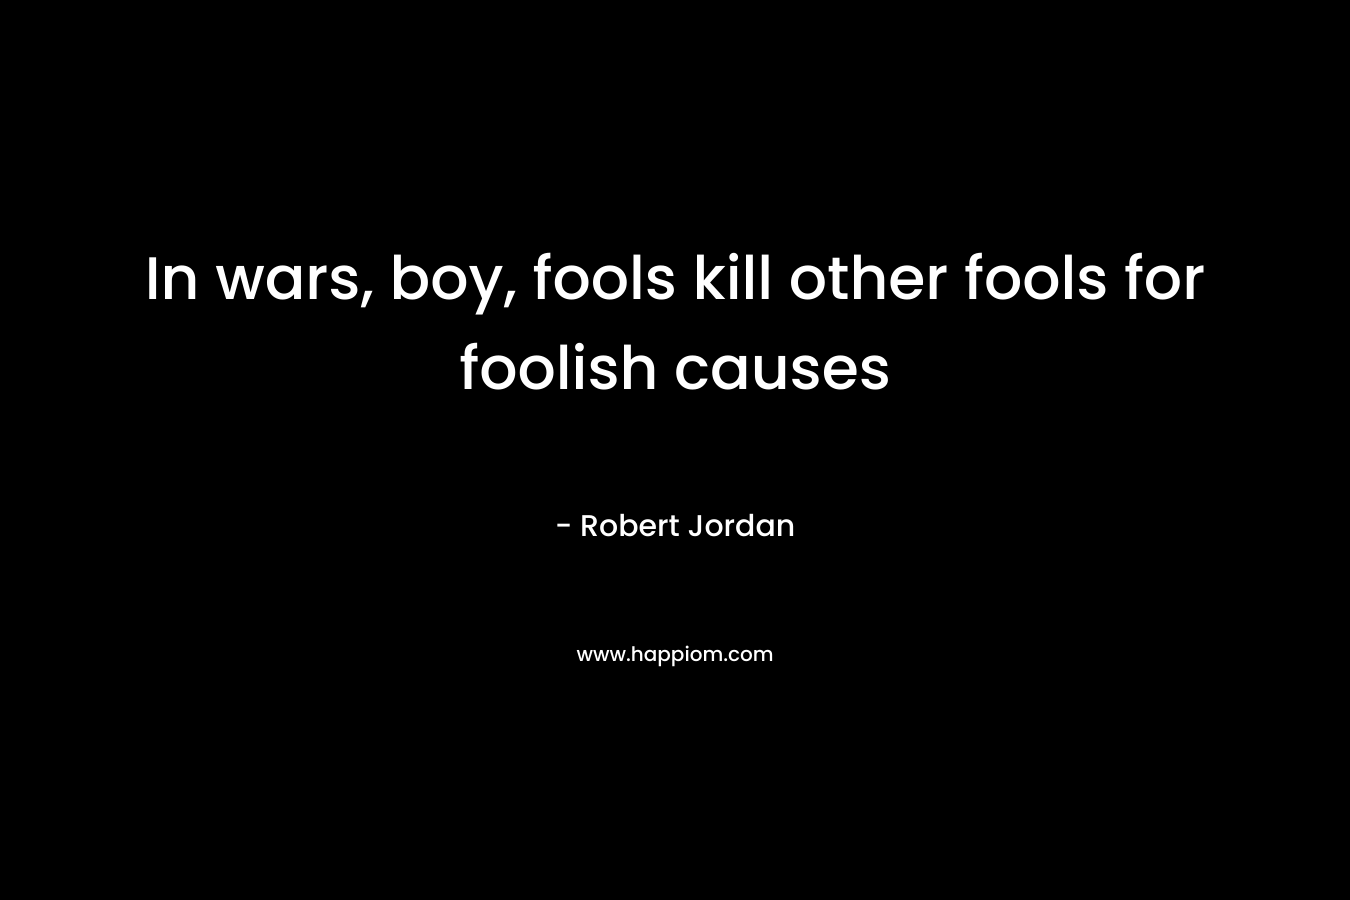 In wars, boy, fools kill other fools for foolish causes